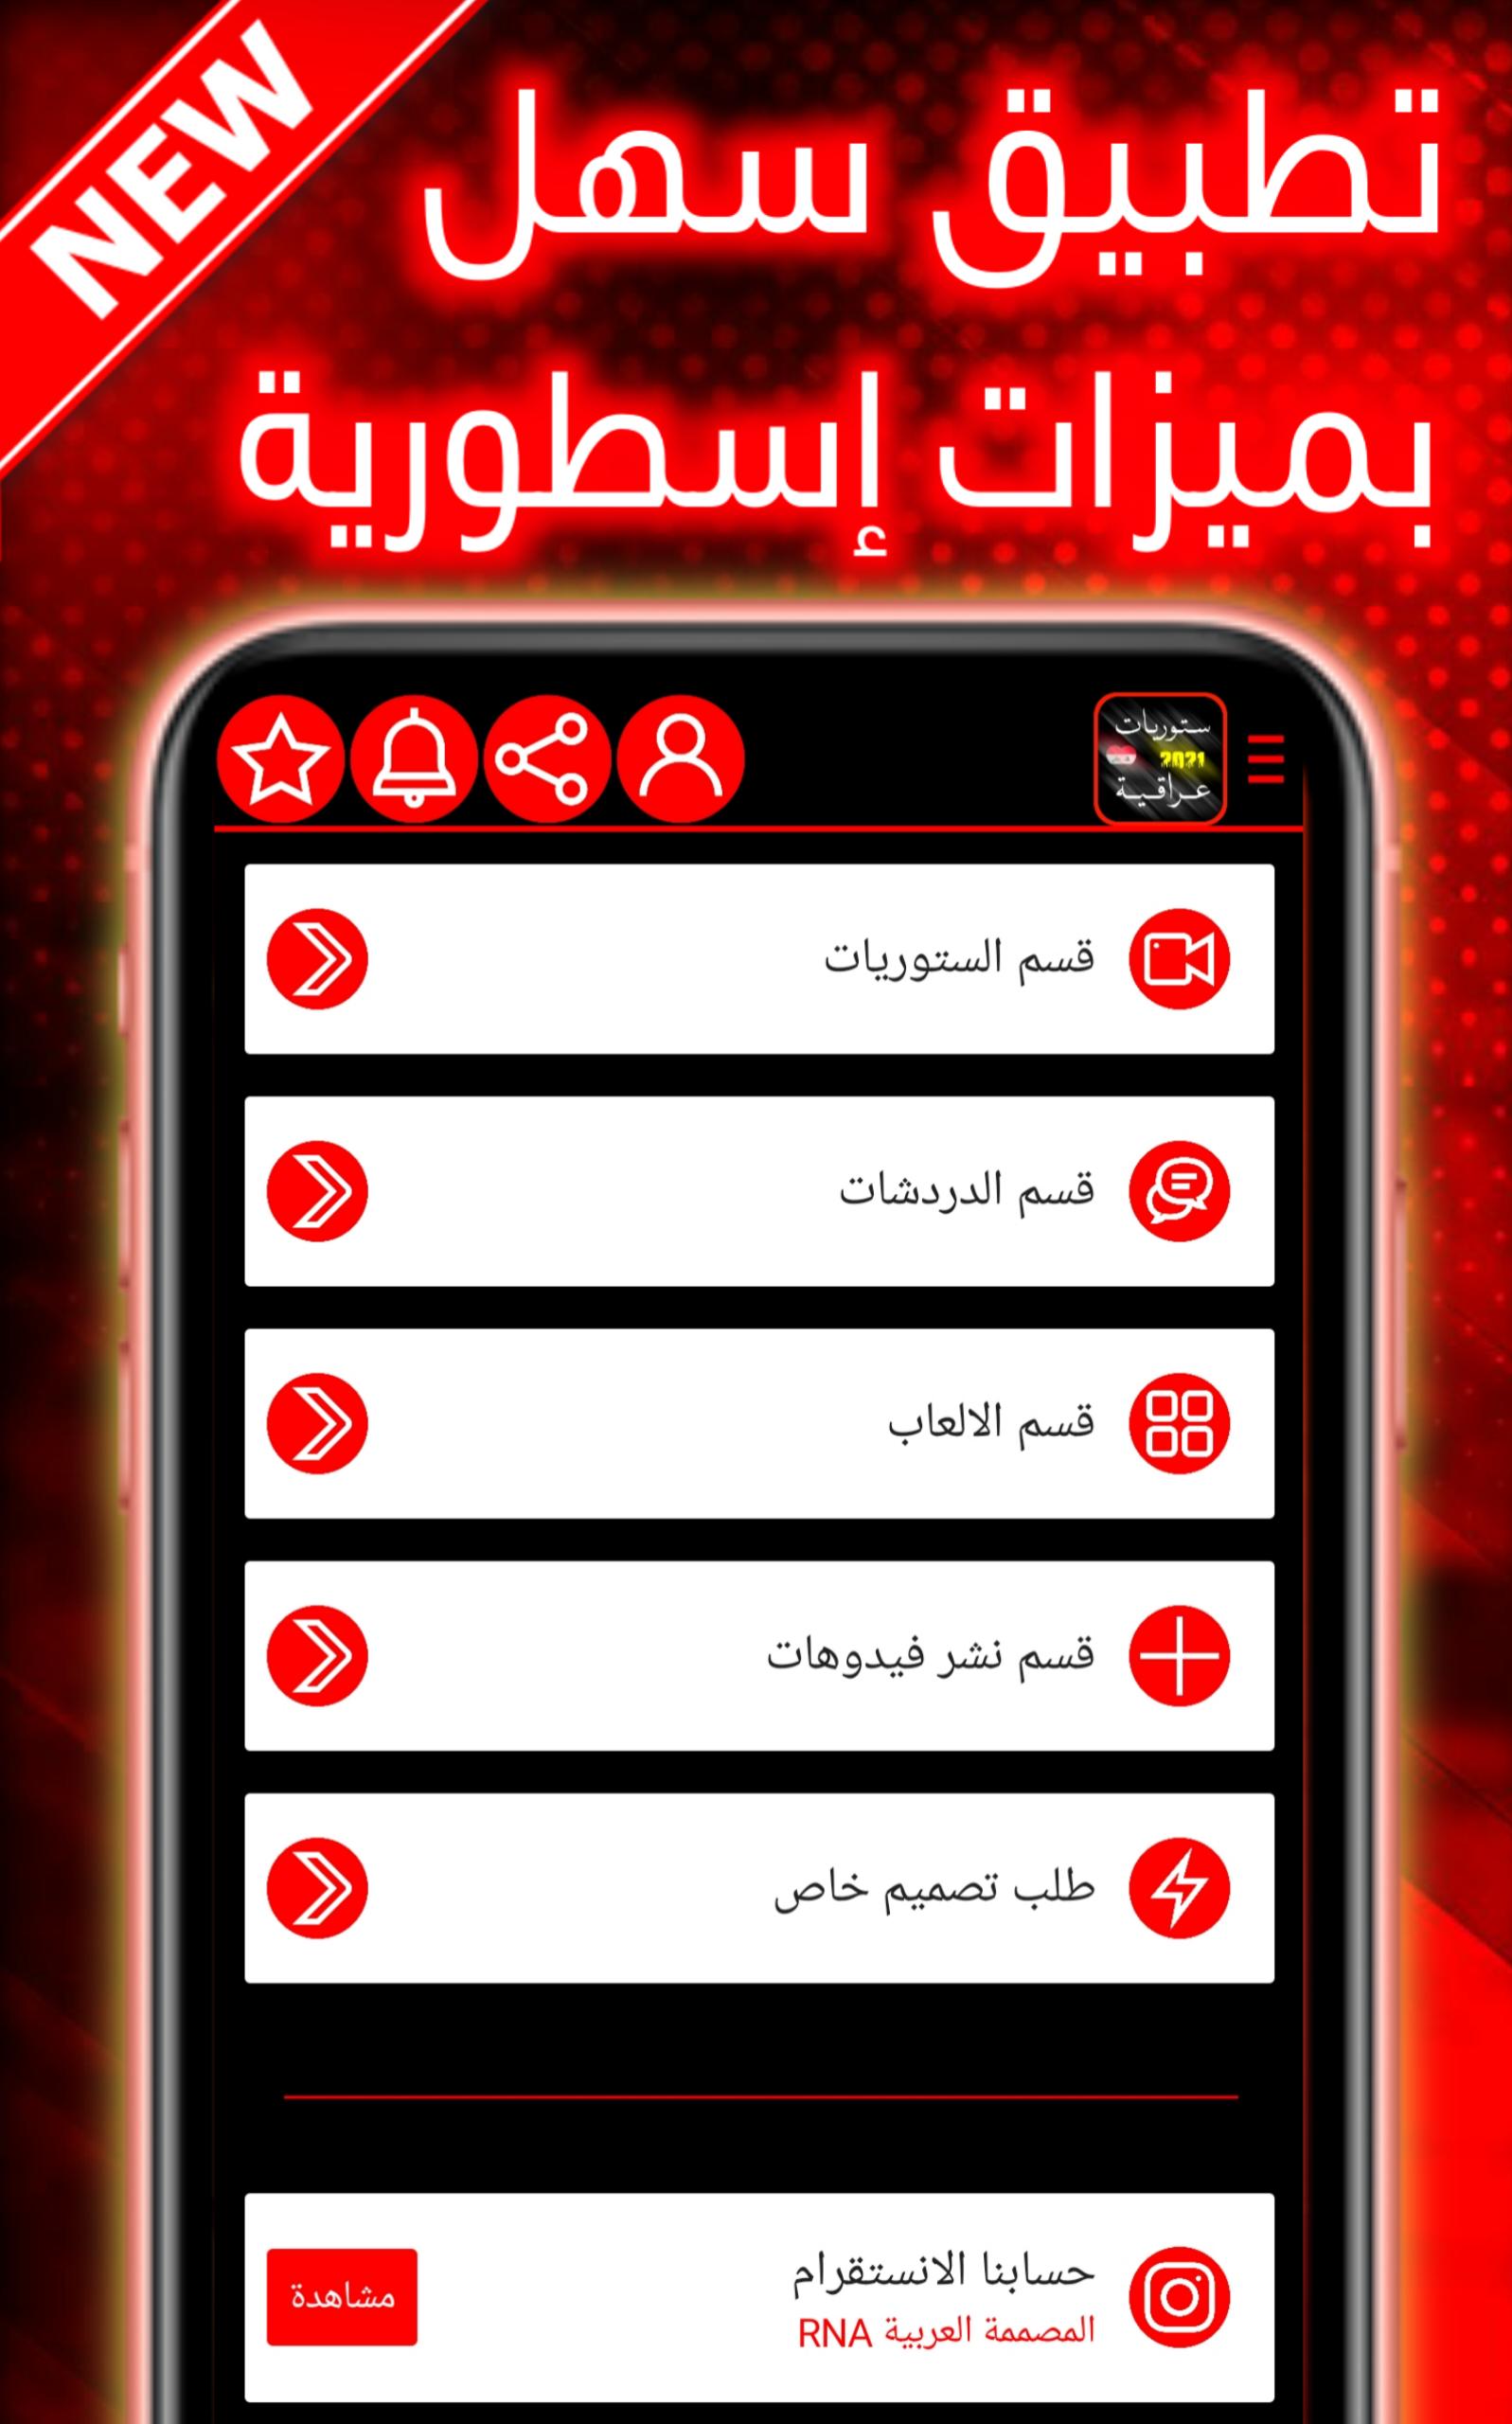 APK تصاميم شاشة سوداء عراقية | بدون حقوق untuk Muat Turun Android